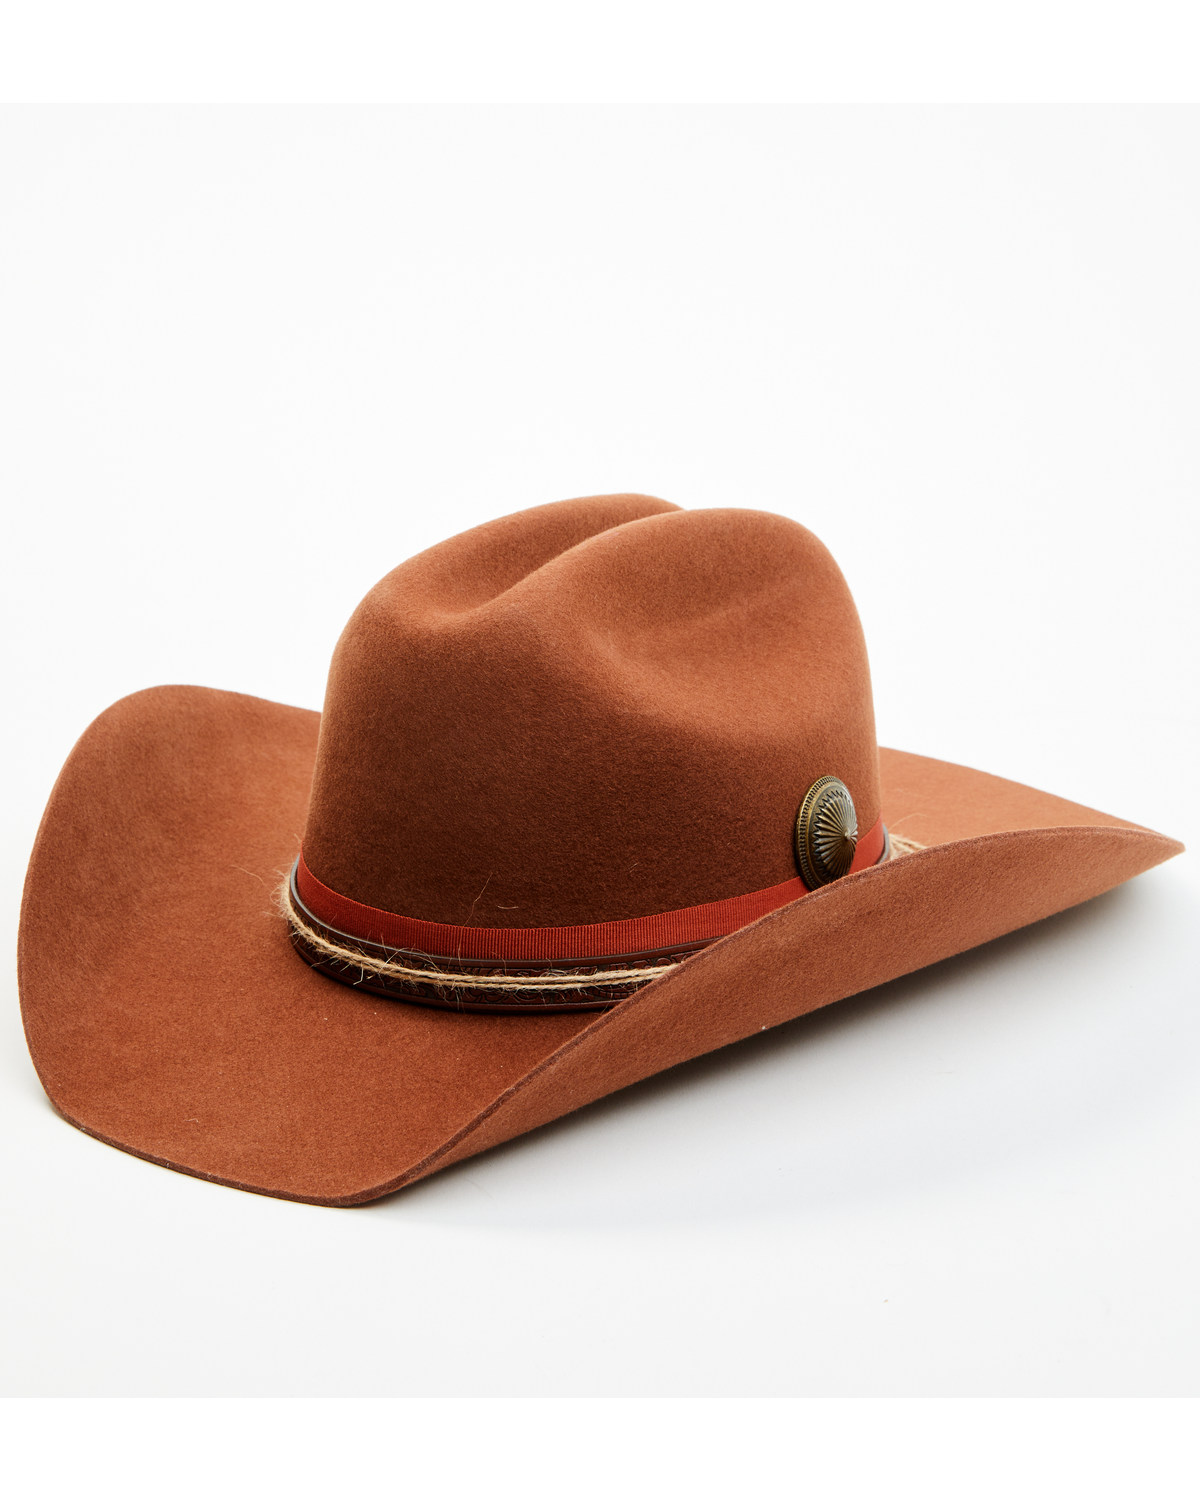 Idyllwind Women's Madison Felt Cowboy Hat